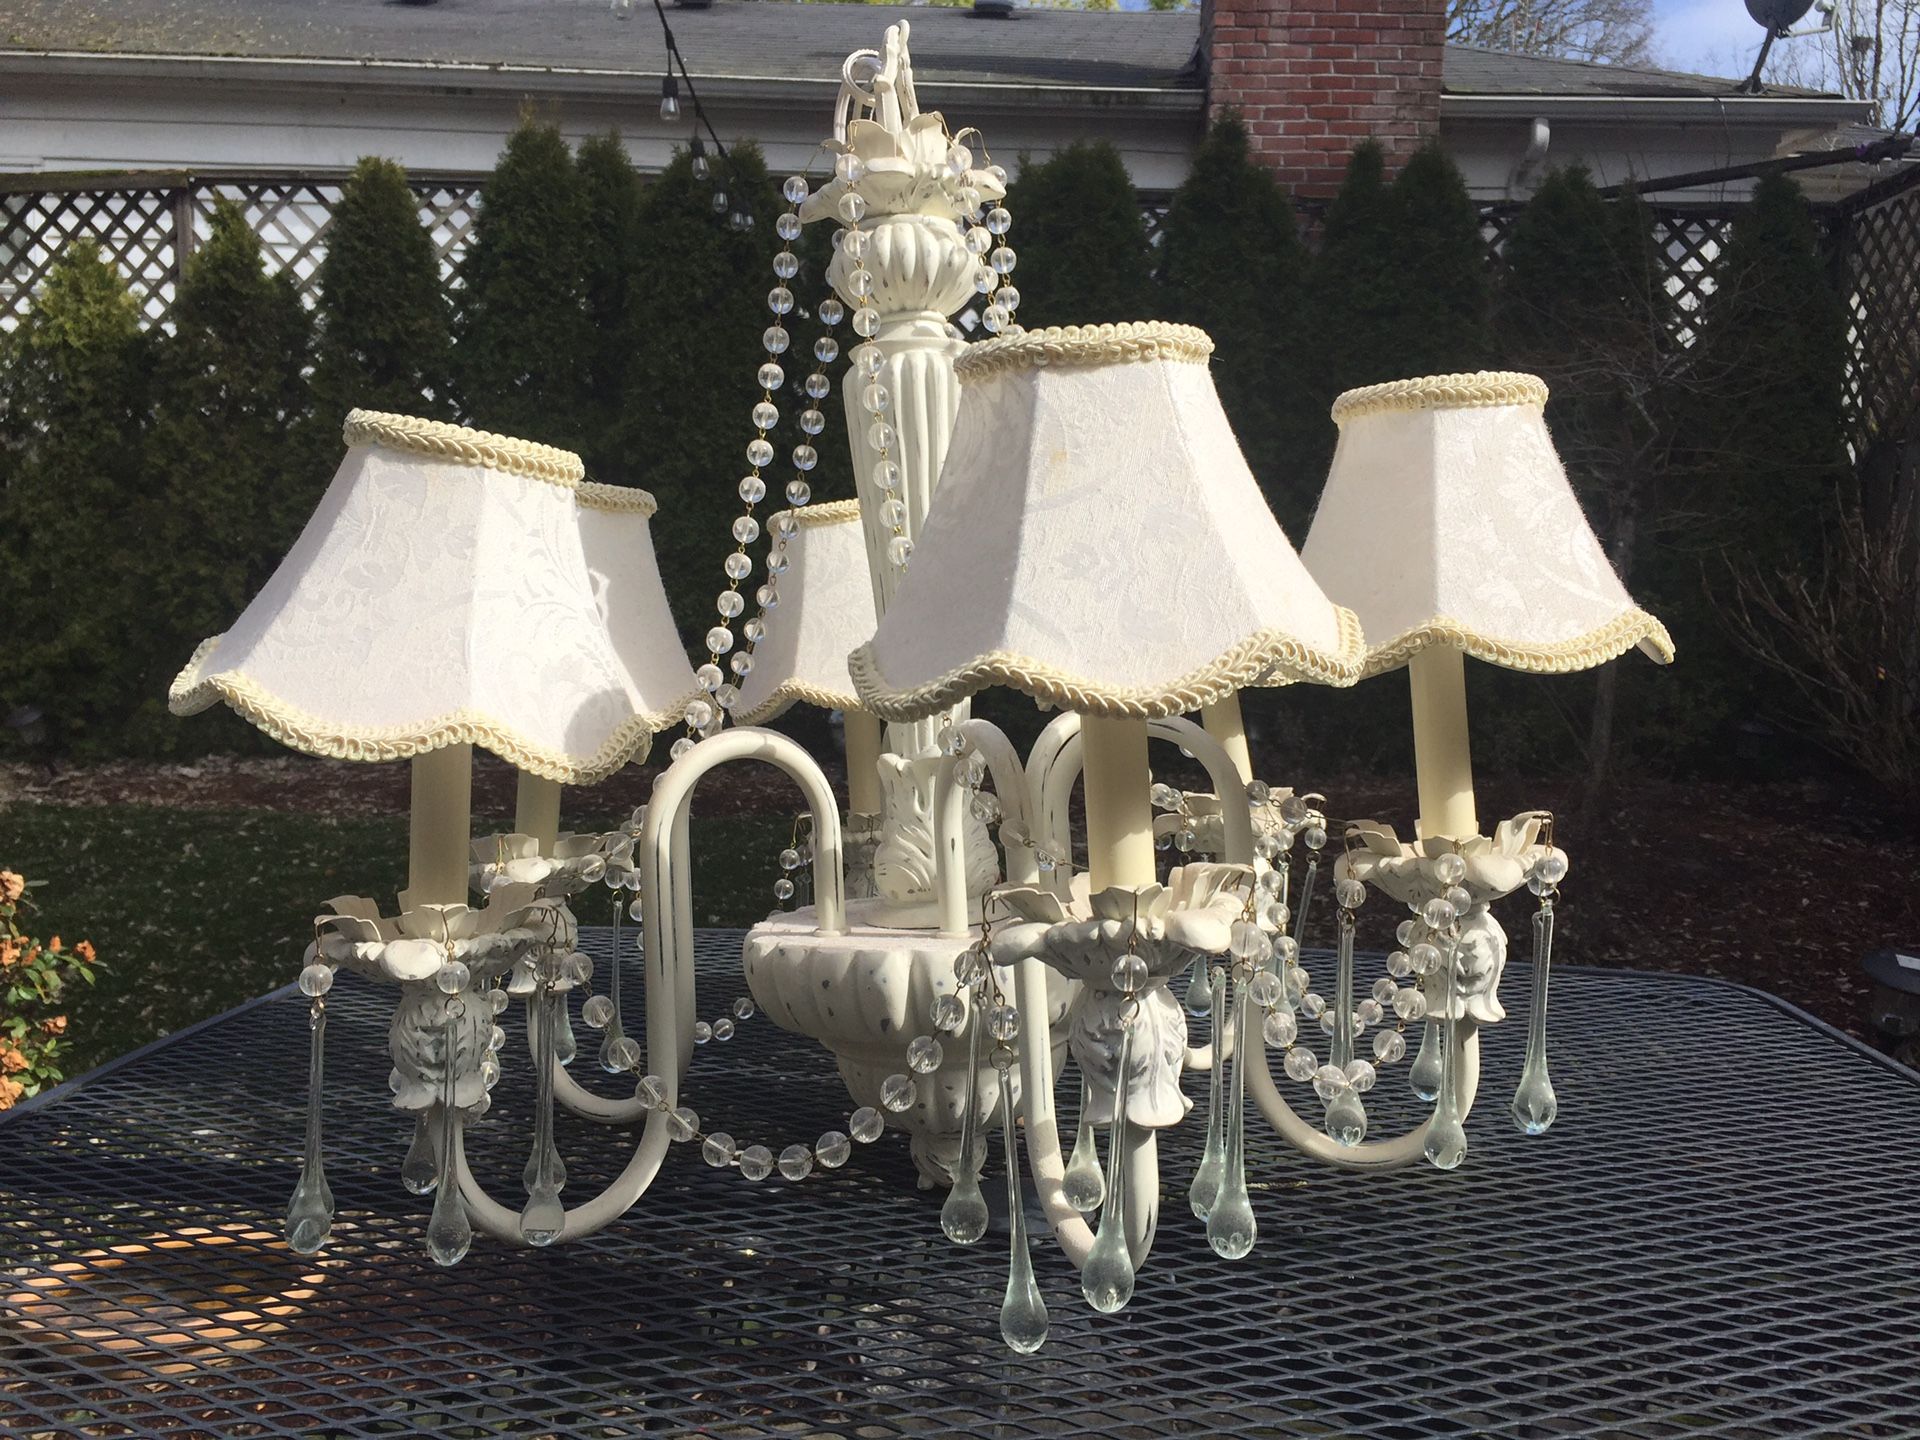 Adorable chandelier